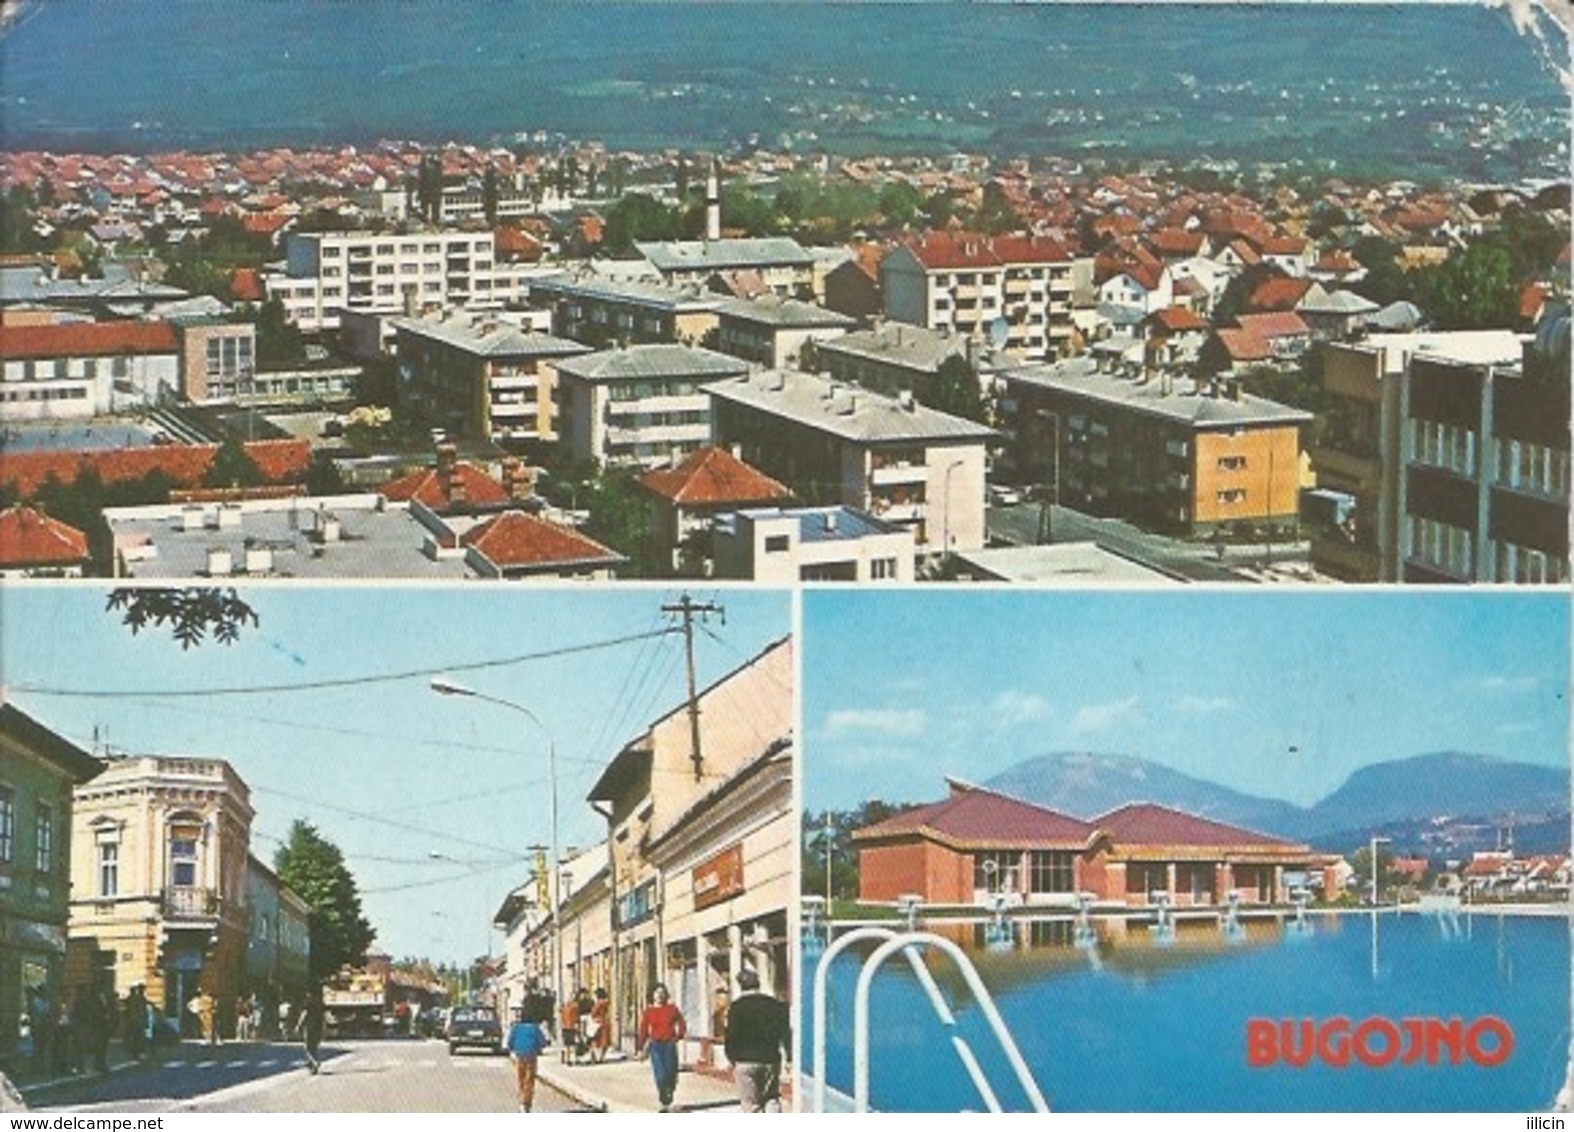 Postcard RA013009 - Bosnia (Bosna Hercegovina) Bugojno - Bosnien-Herzegowina